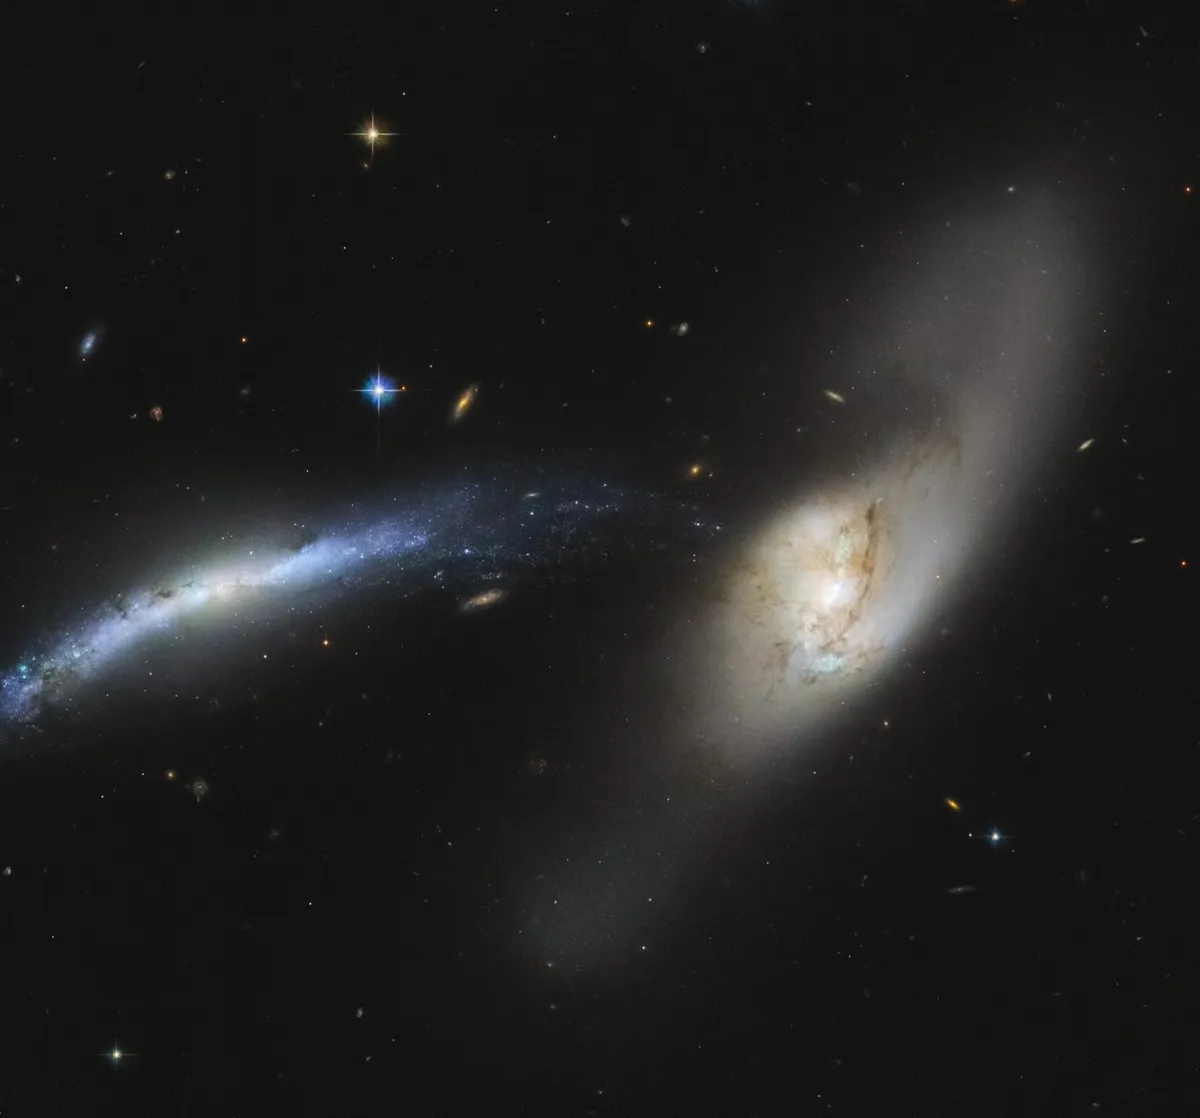 NGC 2799 (left) and NGC 2798 (right) in a galactic merger. Credit: ESA/Hubble & NASA/ SDSS/J. Dalcanton, CC BY 4.0; Acknowledgement: Judy Schmidt (Geckzilla)